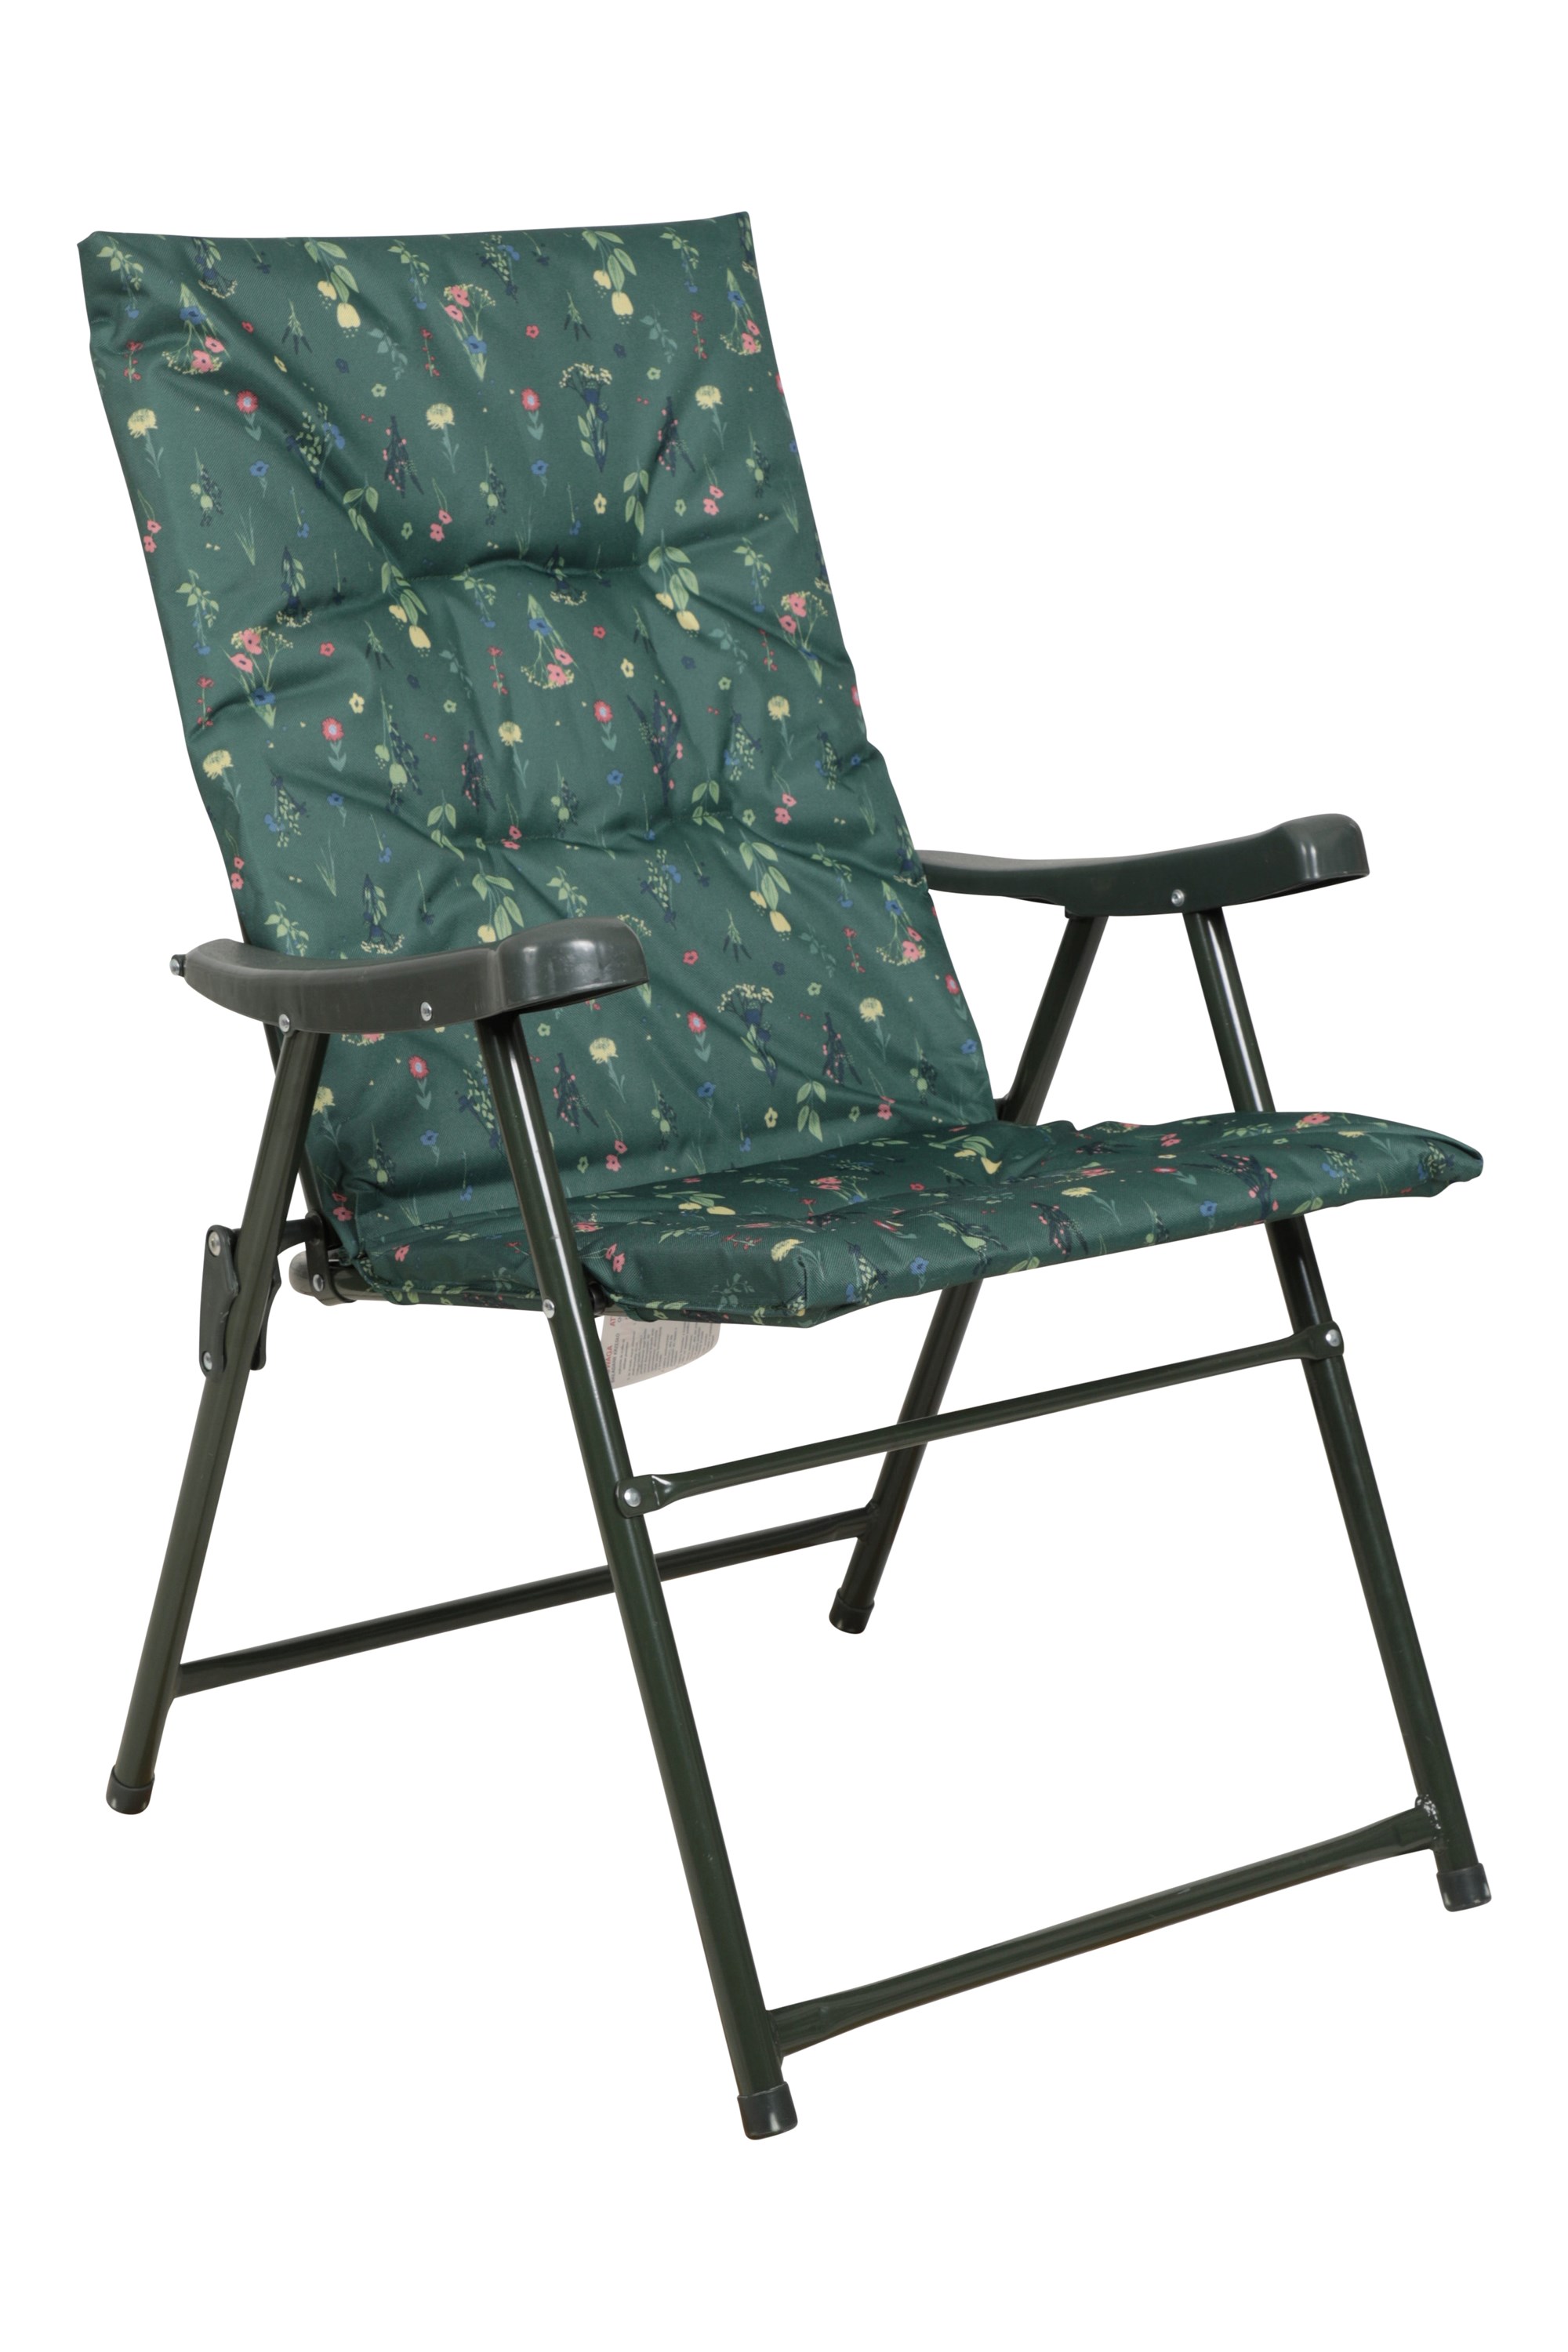 Mountain Warehouse Uni Double Folding Chair 